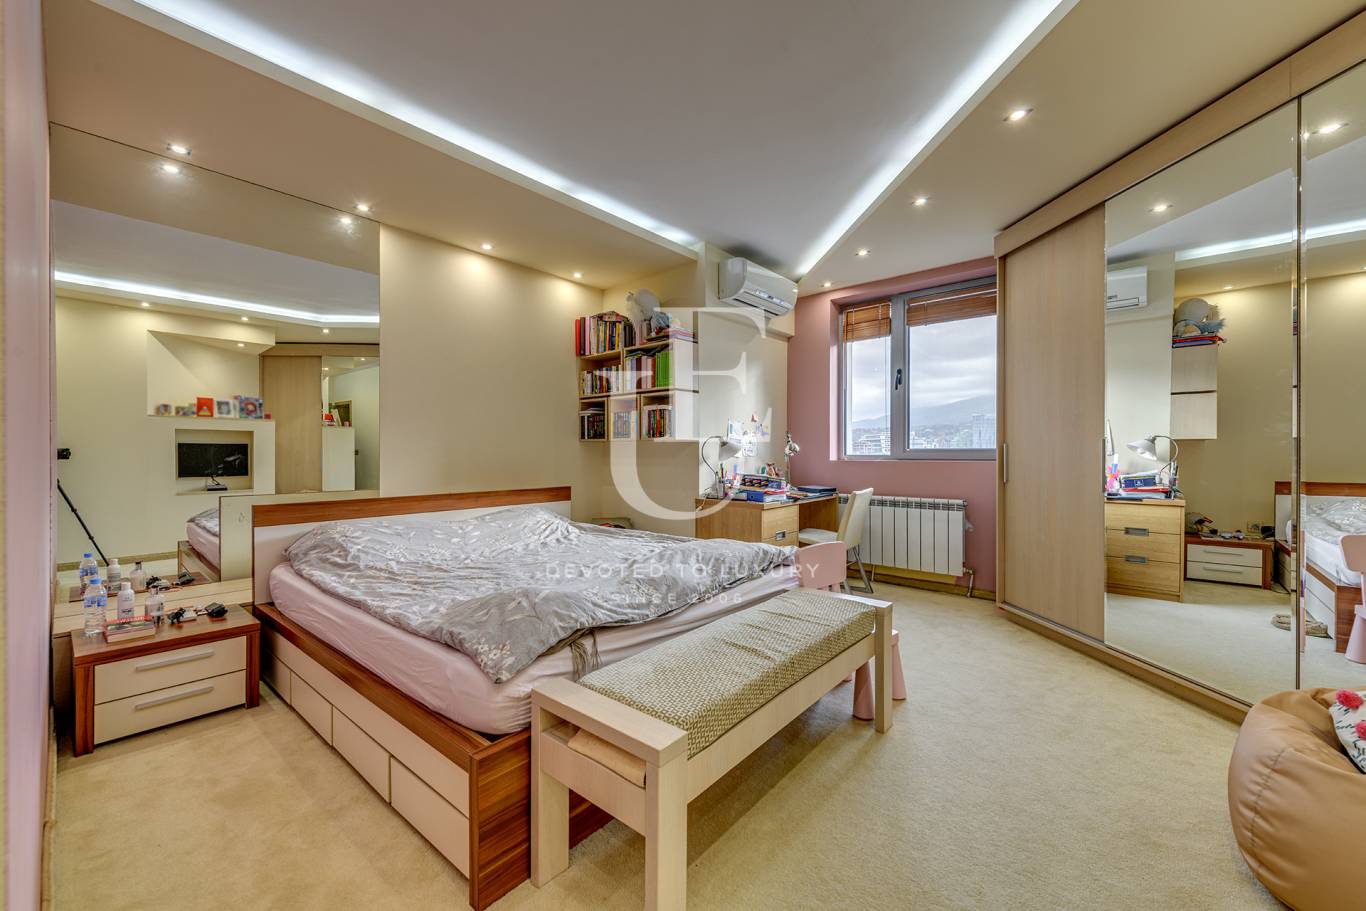 Apartment for sale in Sofia, Manastirski livadi - West with listing ID: K1489 - image 6